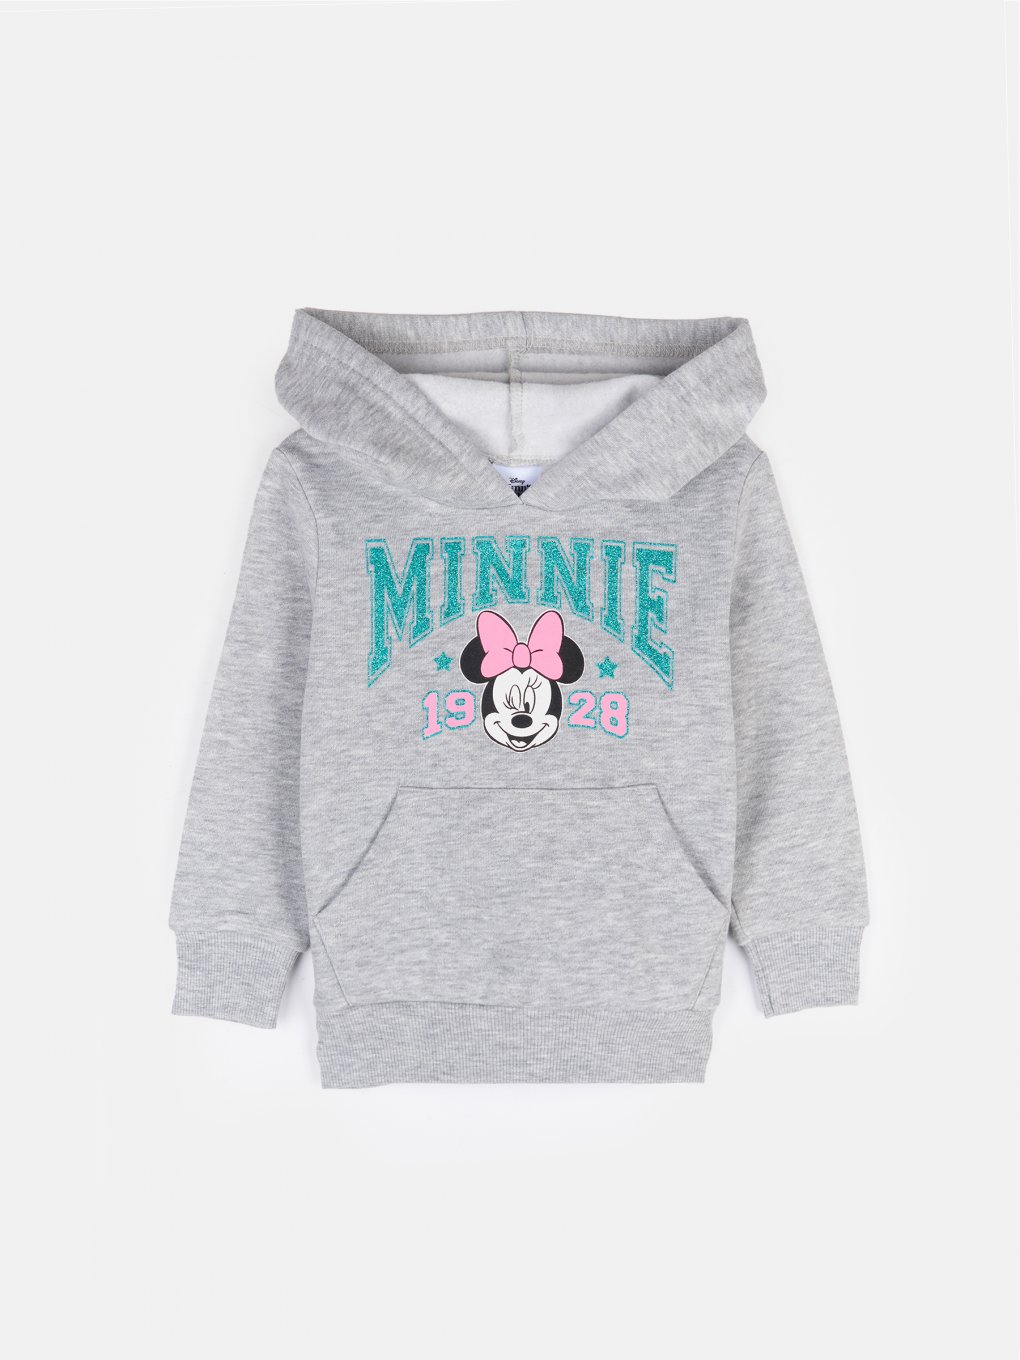 Hoodie Minnie Mouse